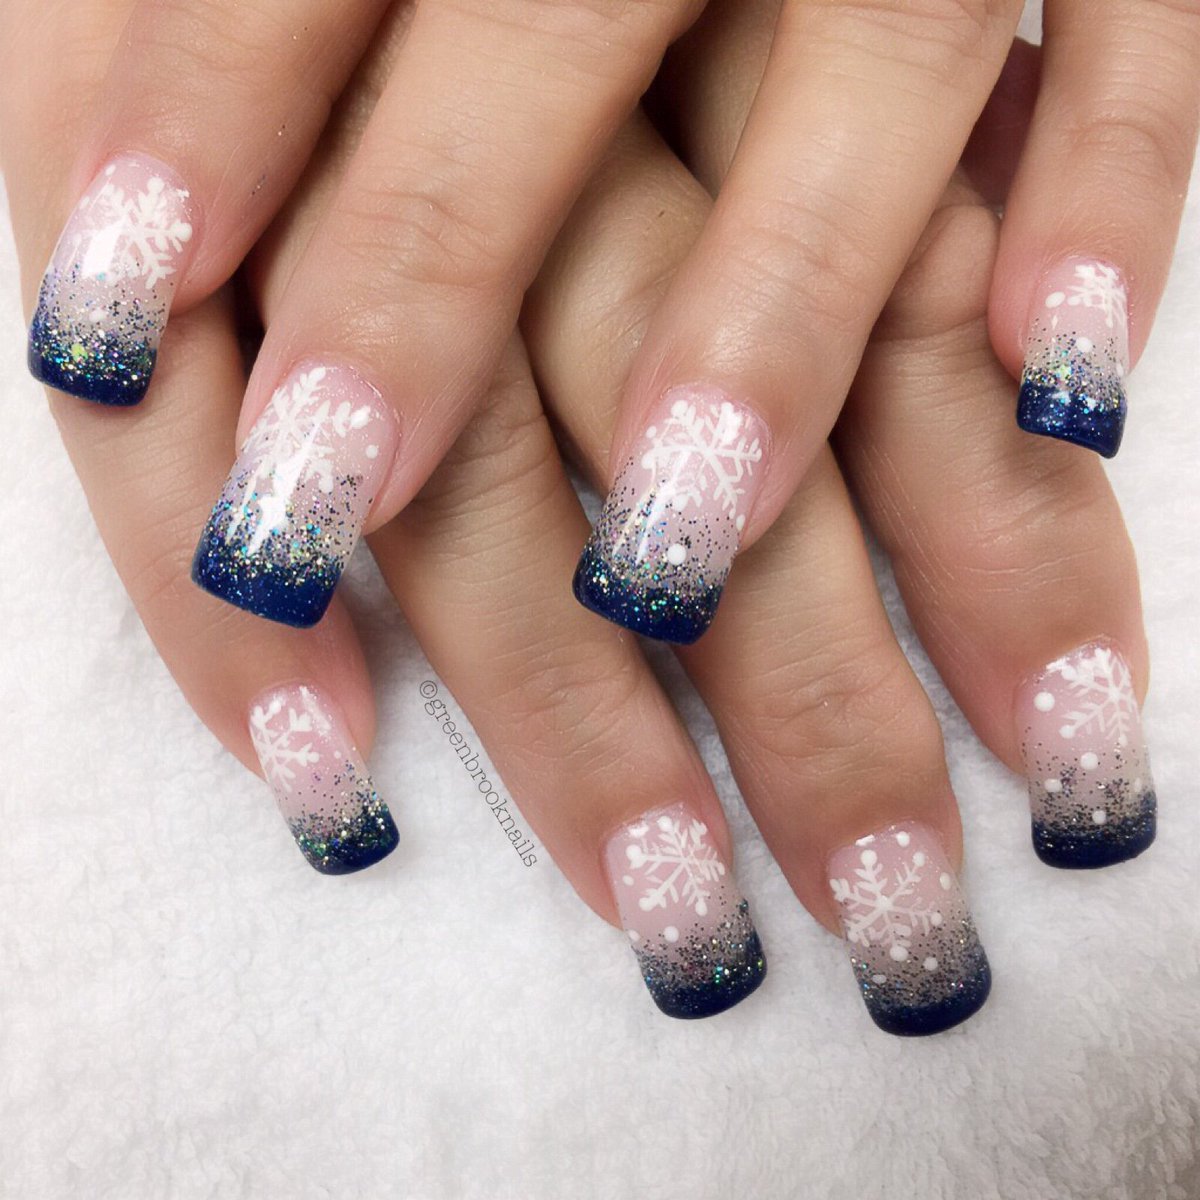 Throwback to these fun winter snowflake nails! ❄️ #winternails #nailsart #snowflakenails #nailsdesign